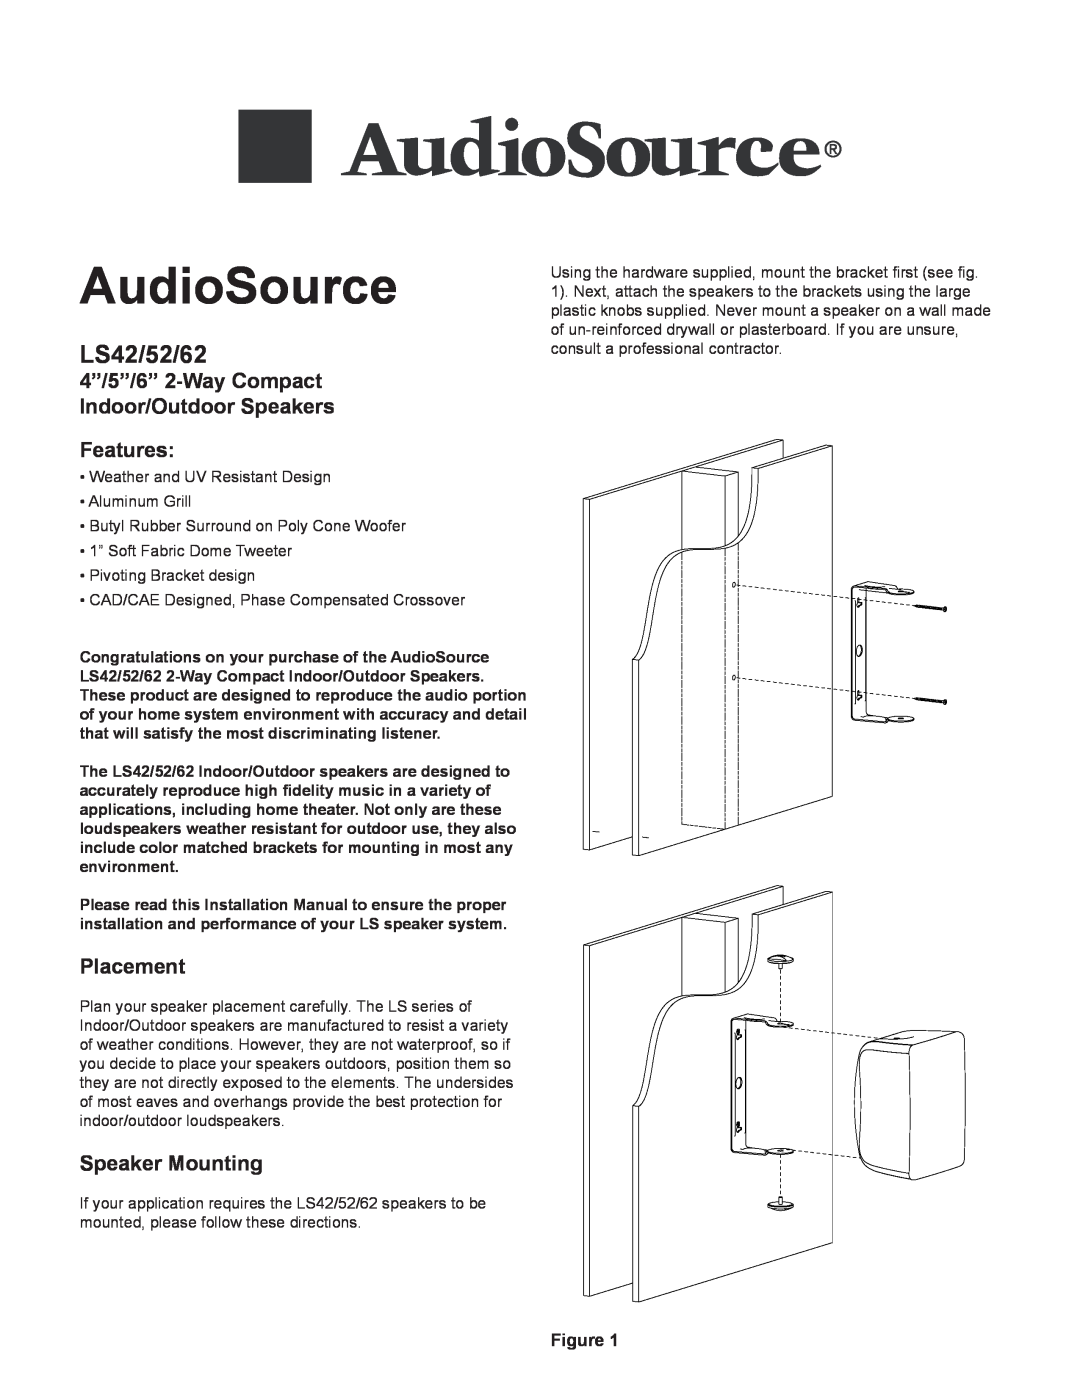 AudioSource 4"/5"/6" 2-Way Compact Indoor/Outdoor Speakers installation manual Features, Placement, Speaker Mounting 